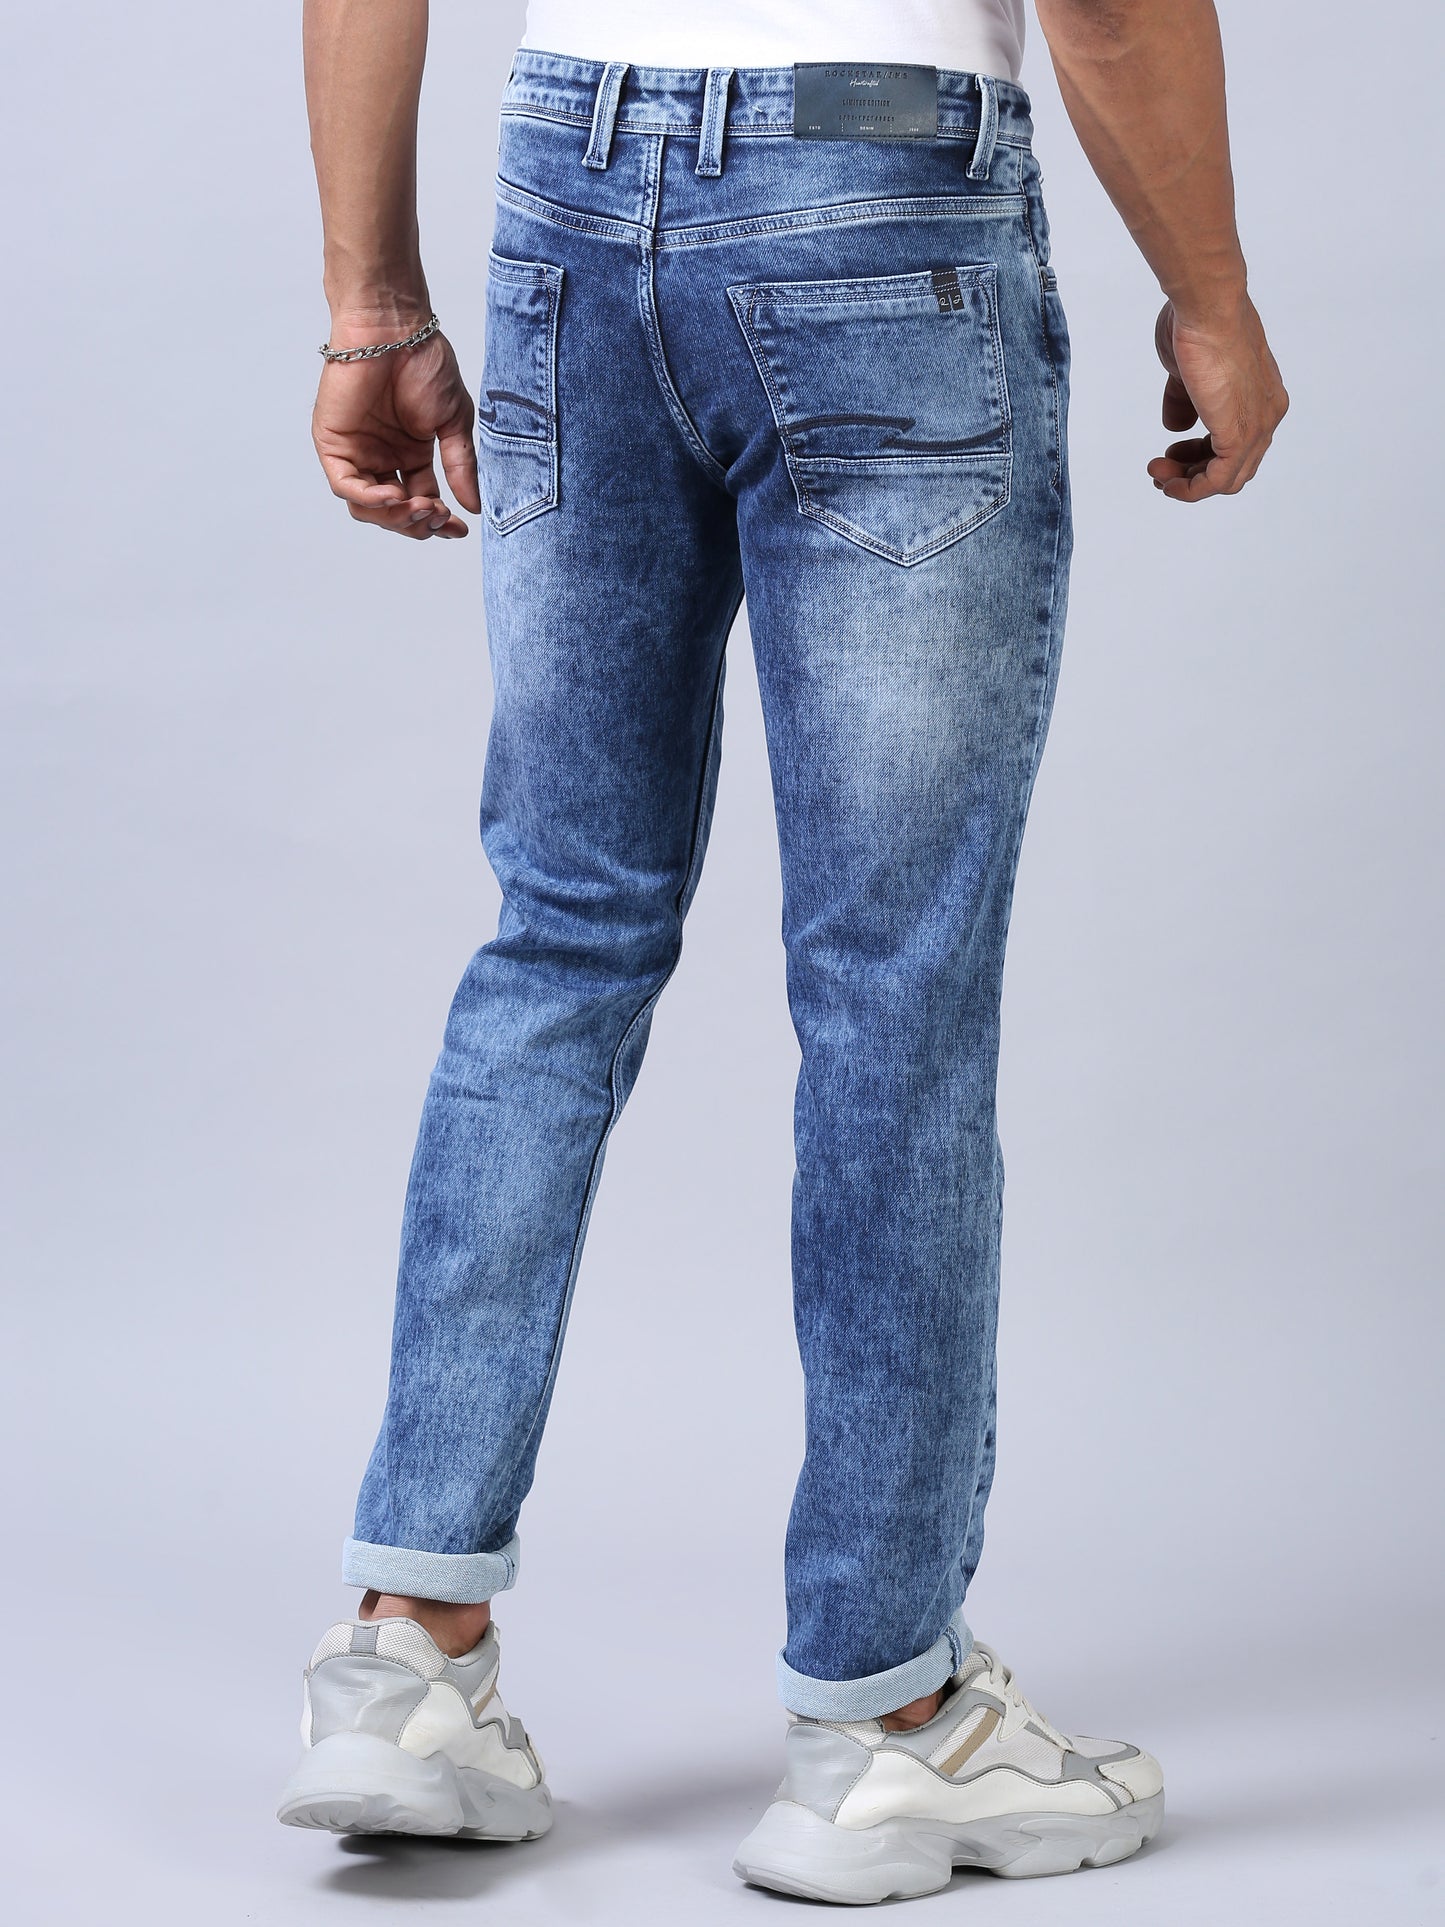 Faded Blue Denim Jeans for Men